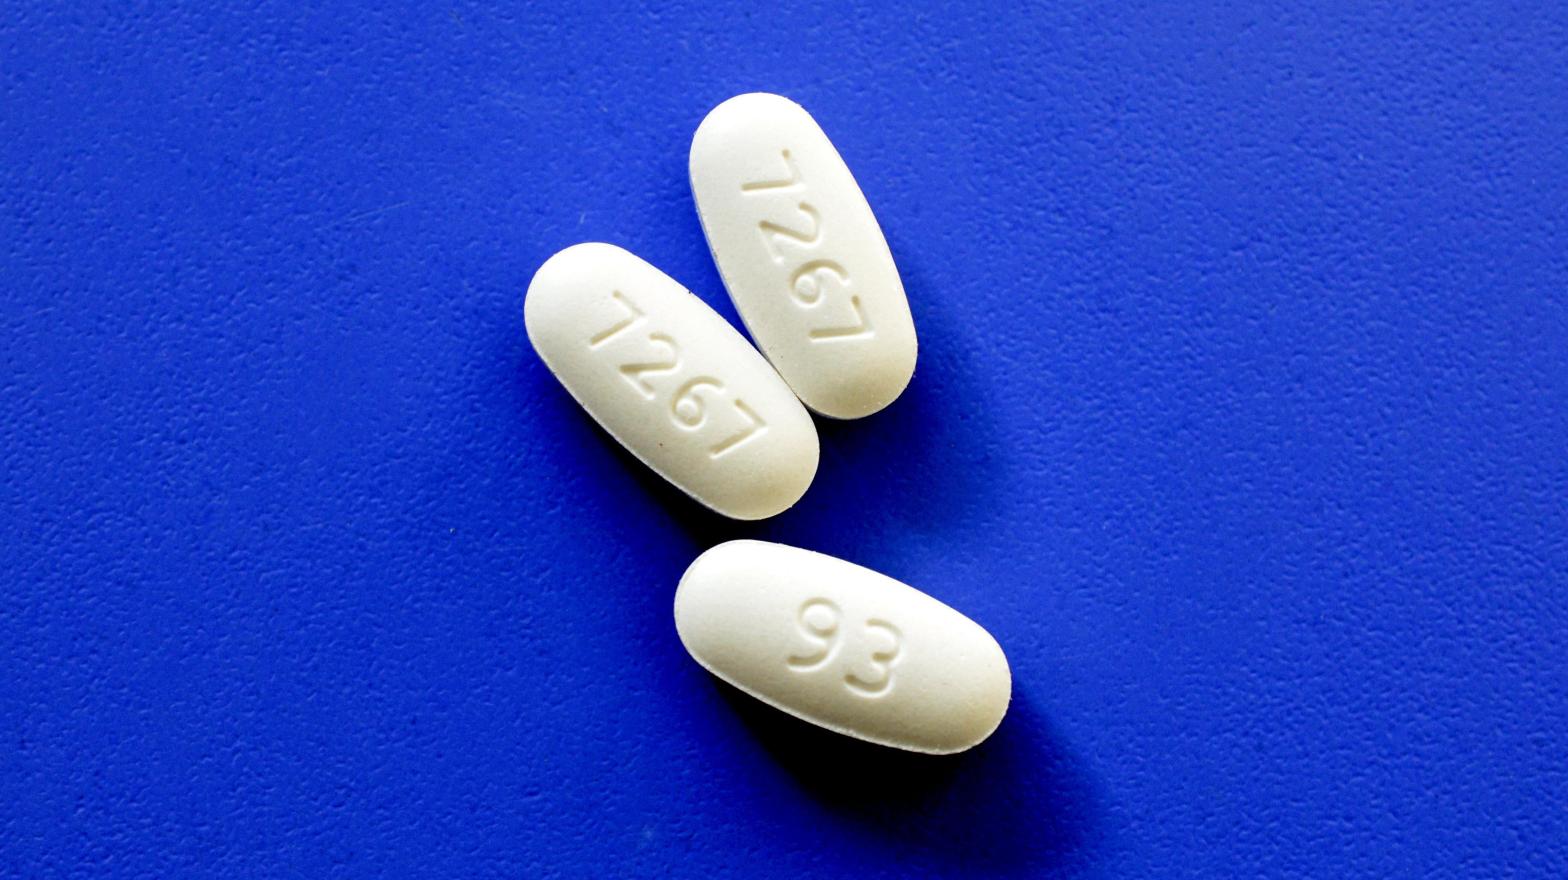 Metformin pills. (Photo: Shutterstock, Shutterstock)